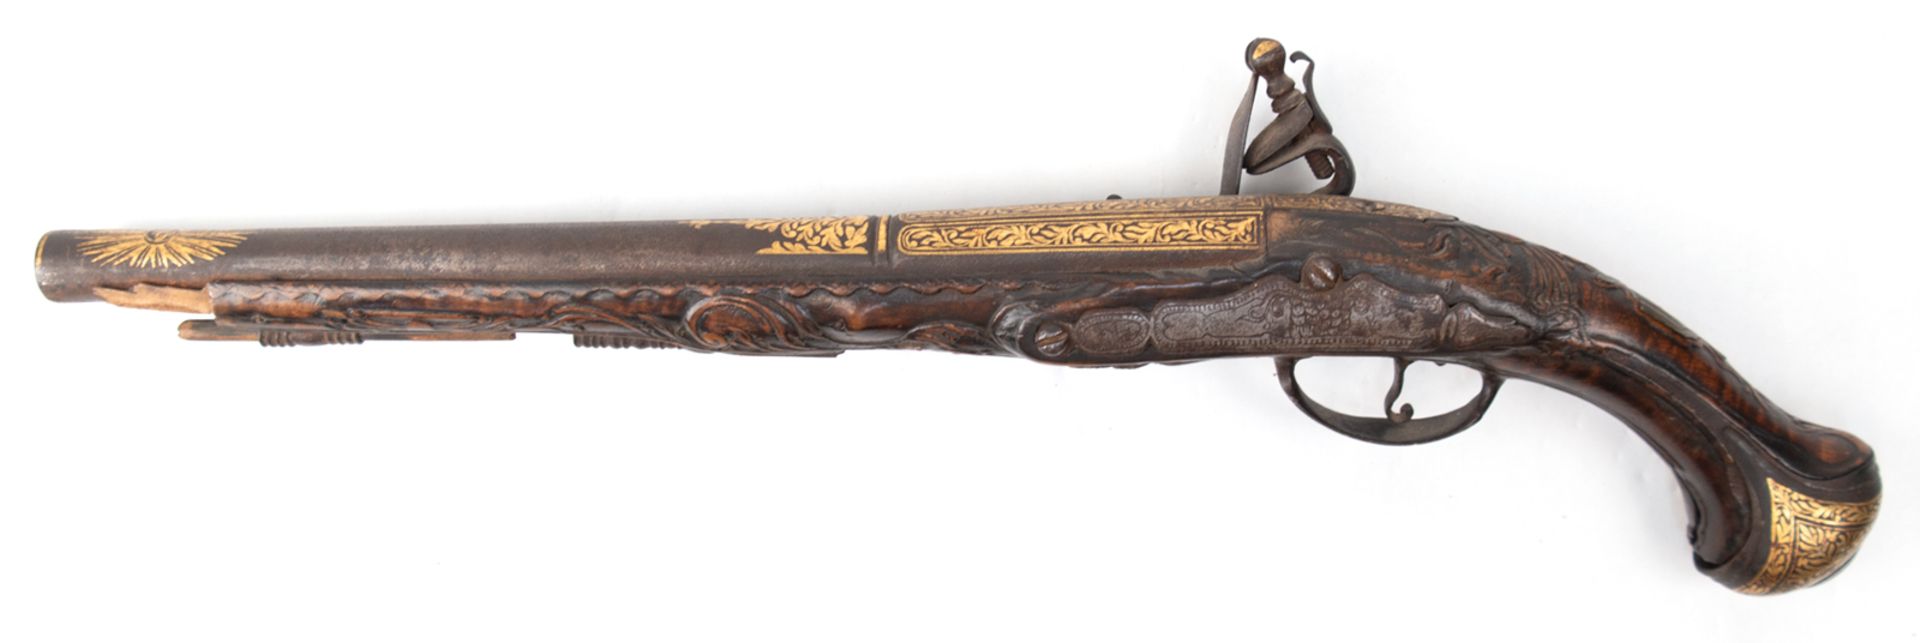 Steinschloßpistole, 18. Jh., nicht funktionstüchtig, Schloß defekt, starke Gebrauchspuren, L. 49 cm - Image 2 of 2